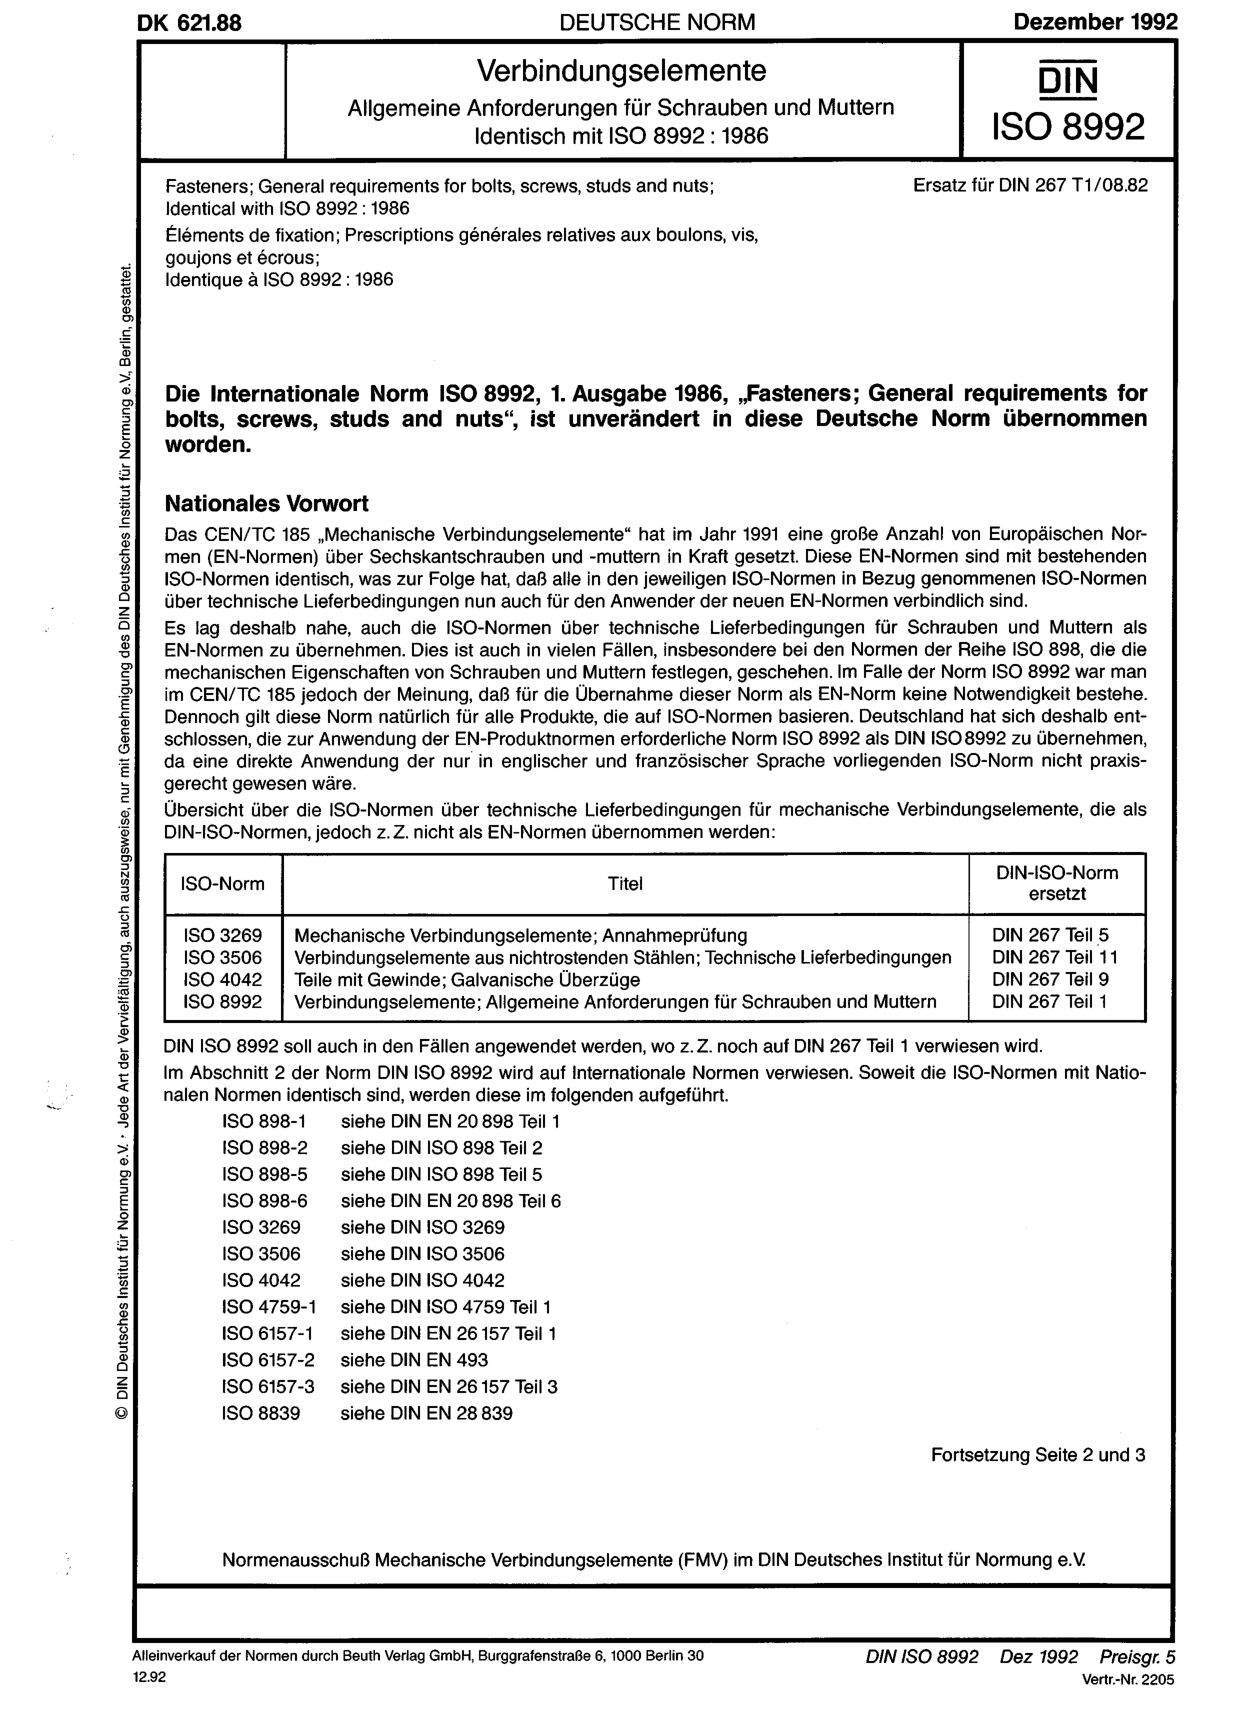 DIN ISO 8992:1992-12